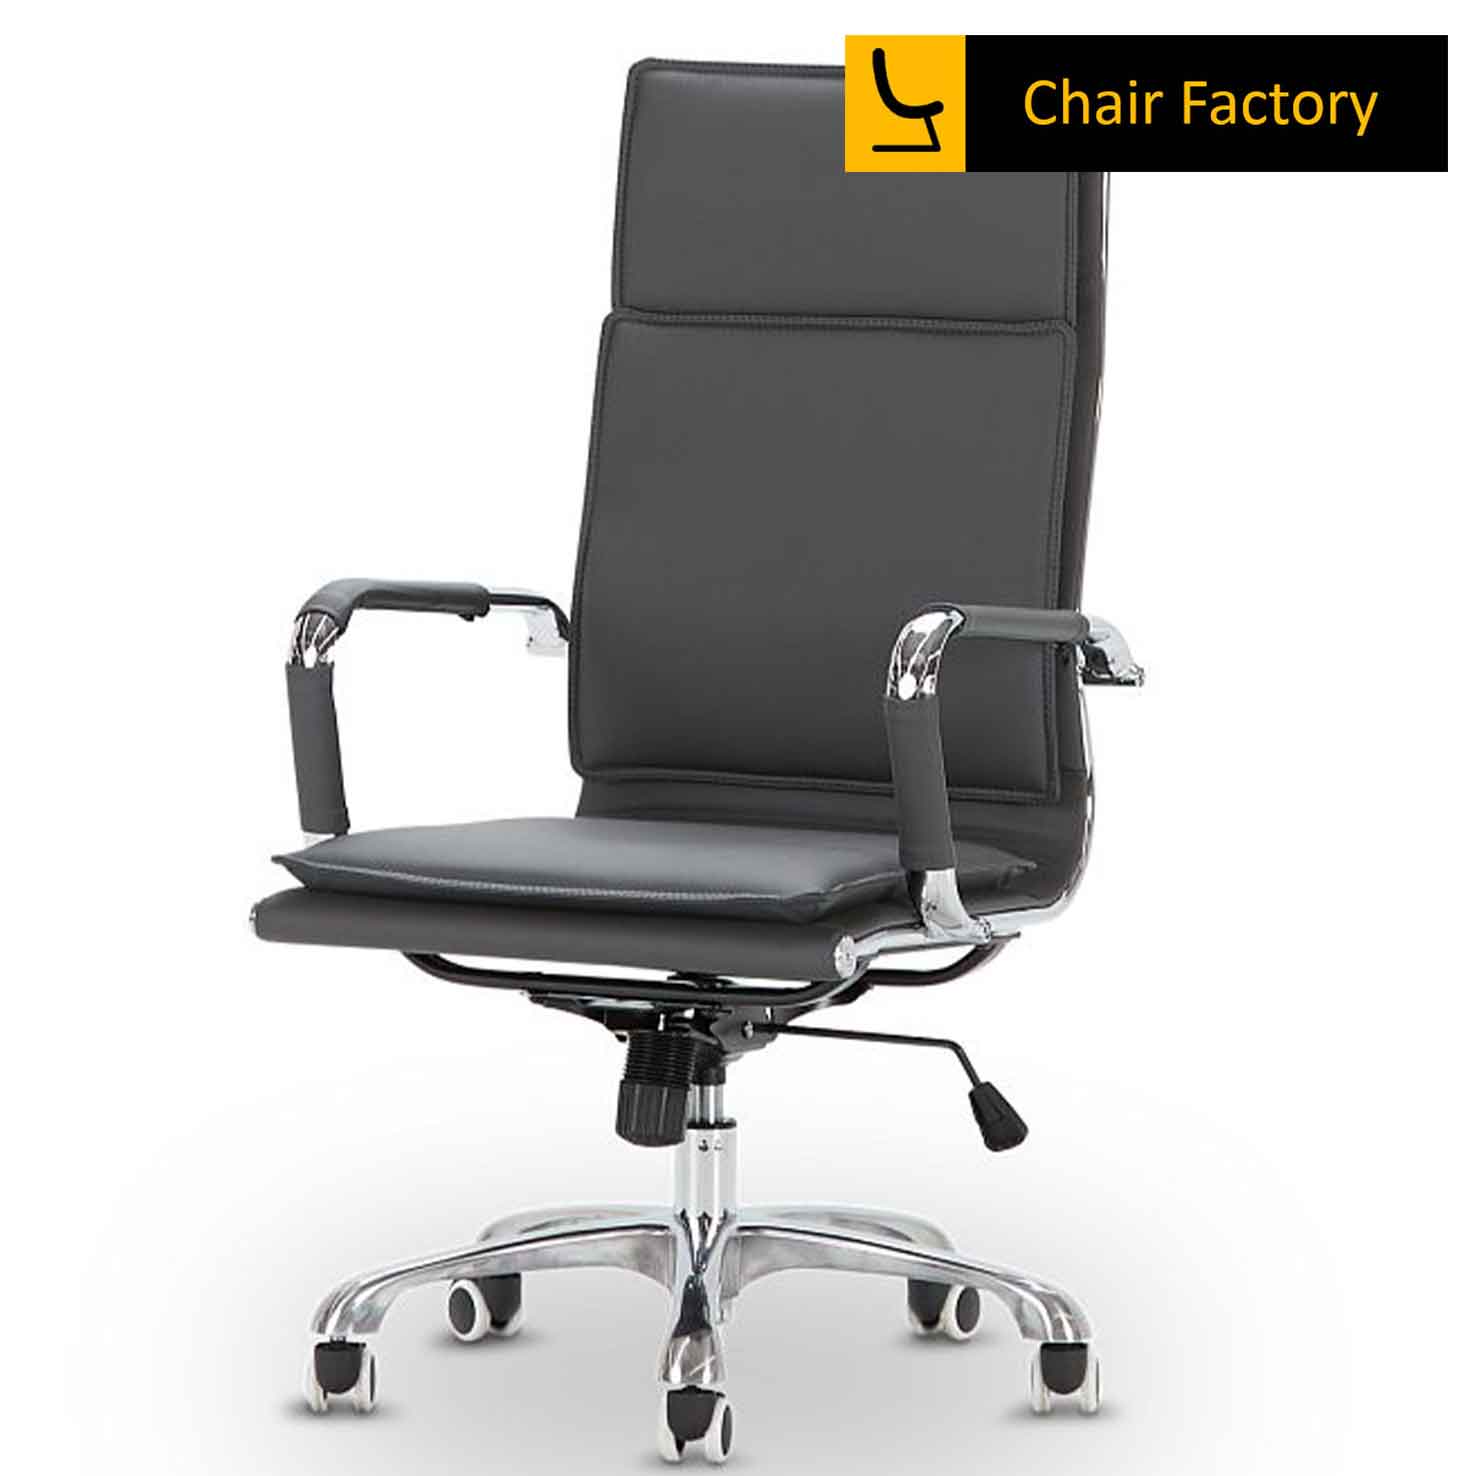 James Double Cushion Grey High Back Leather Chair 